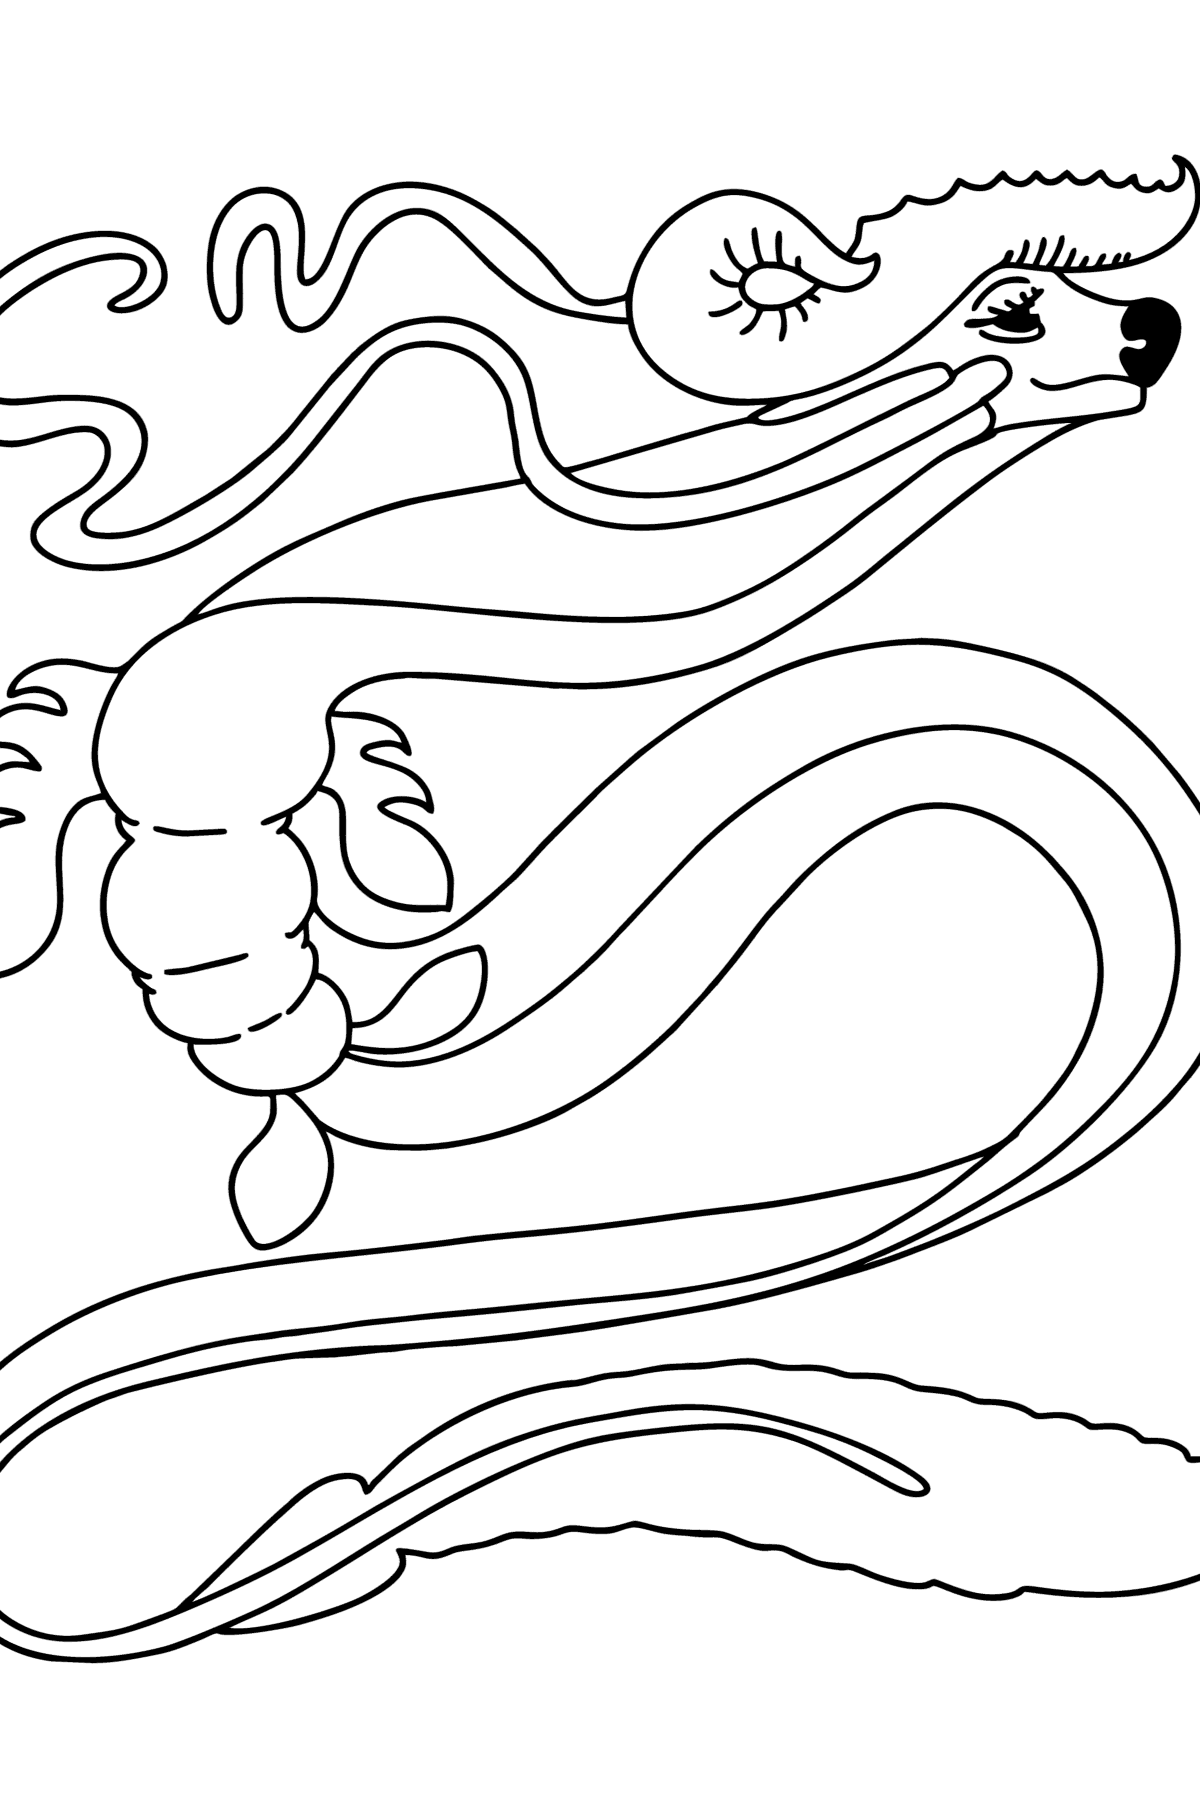 Tegning til fargelegging slange drage - Tegninger til fargelegging for barn